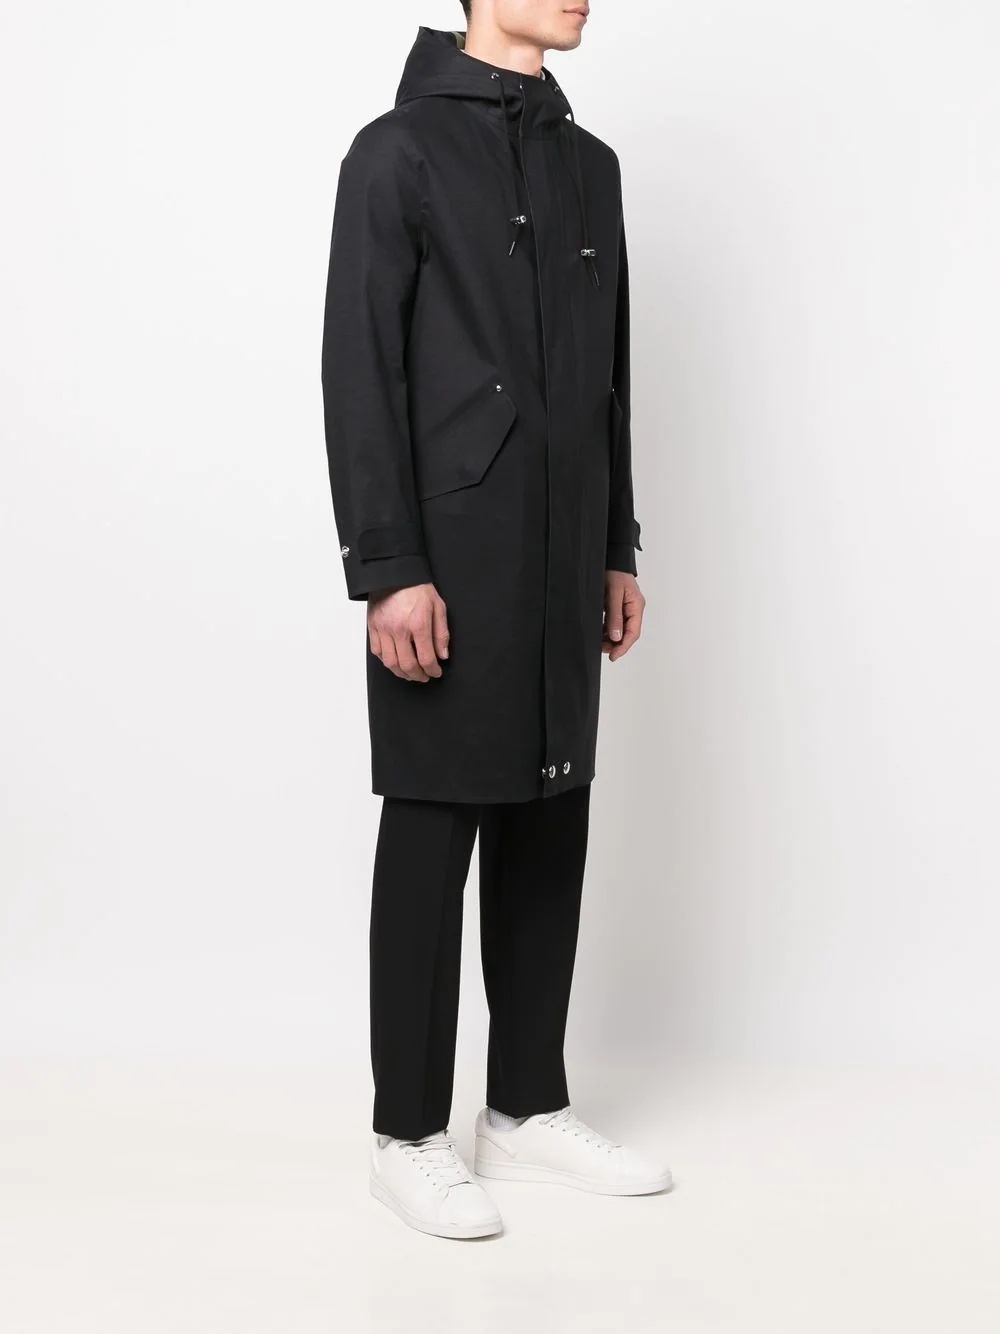 GRANISH Black Bonded Cotton Hooded Coat - 3